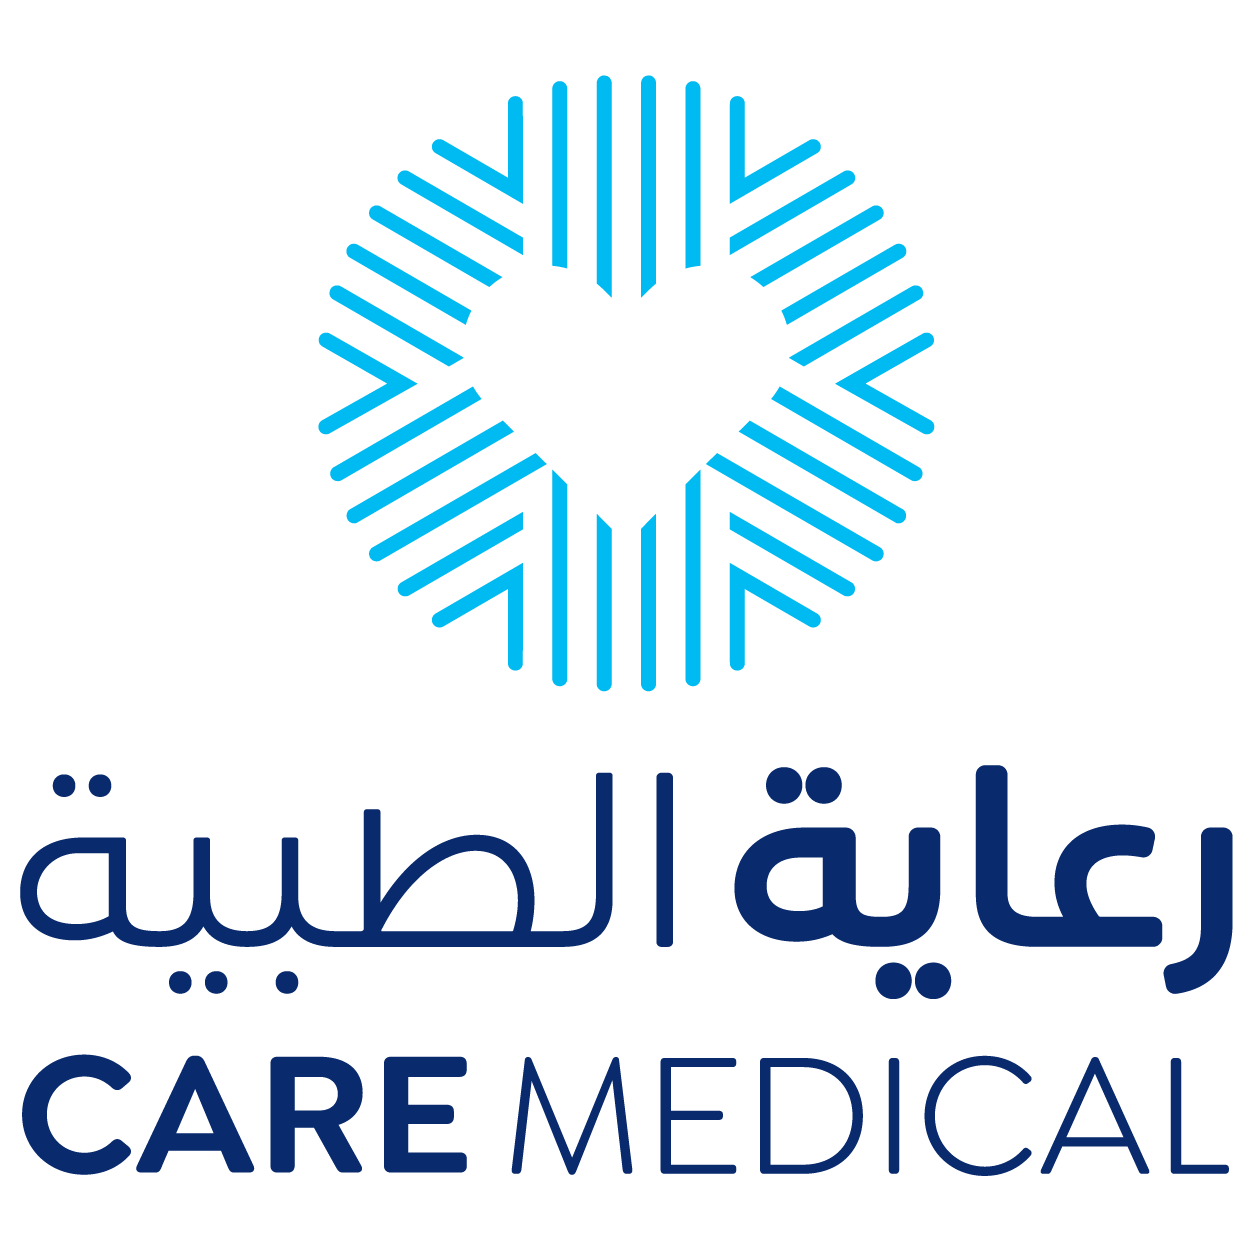 Official Care Medical logo